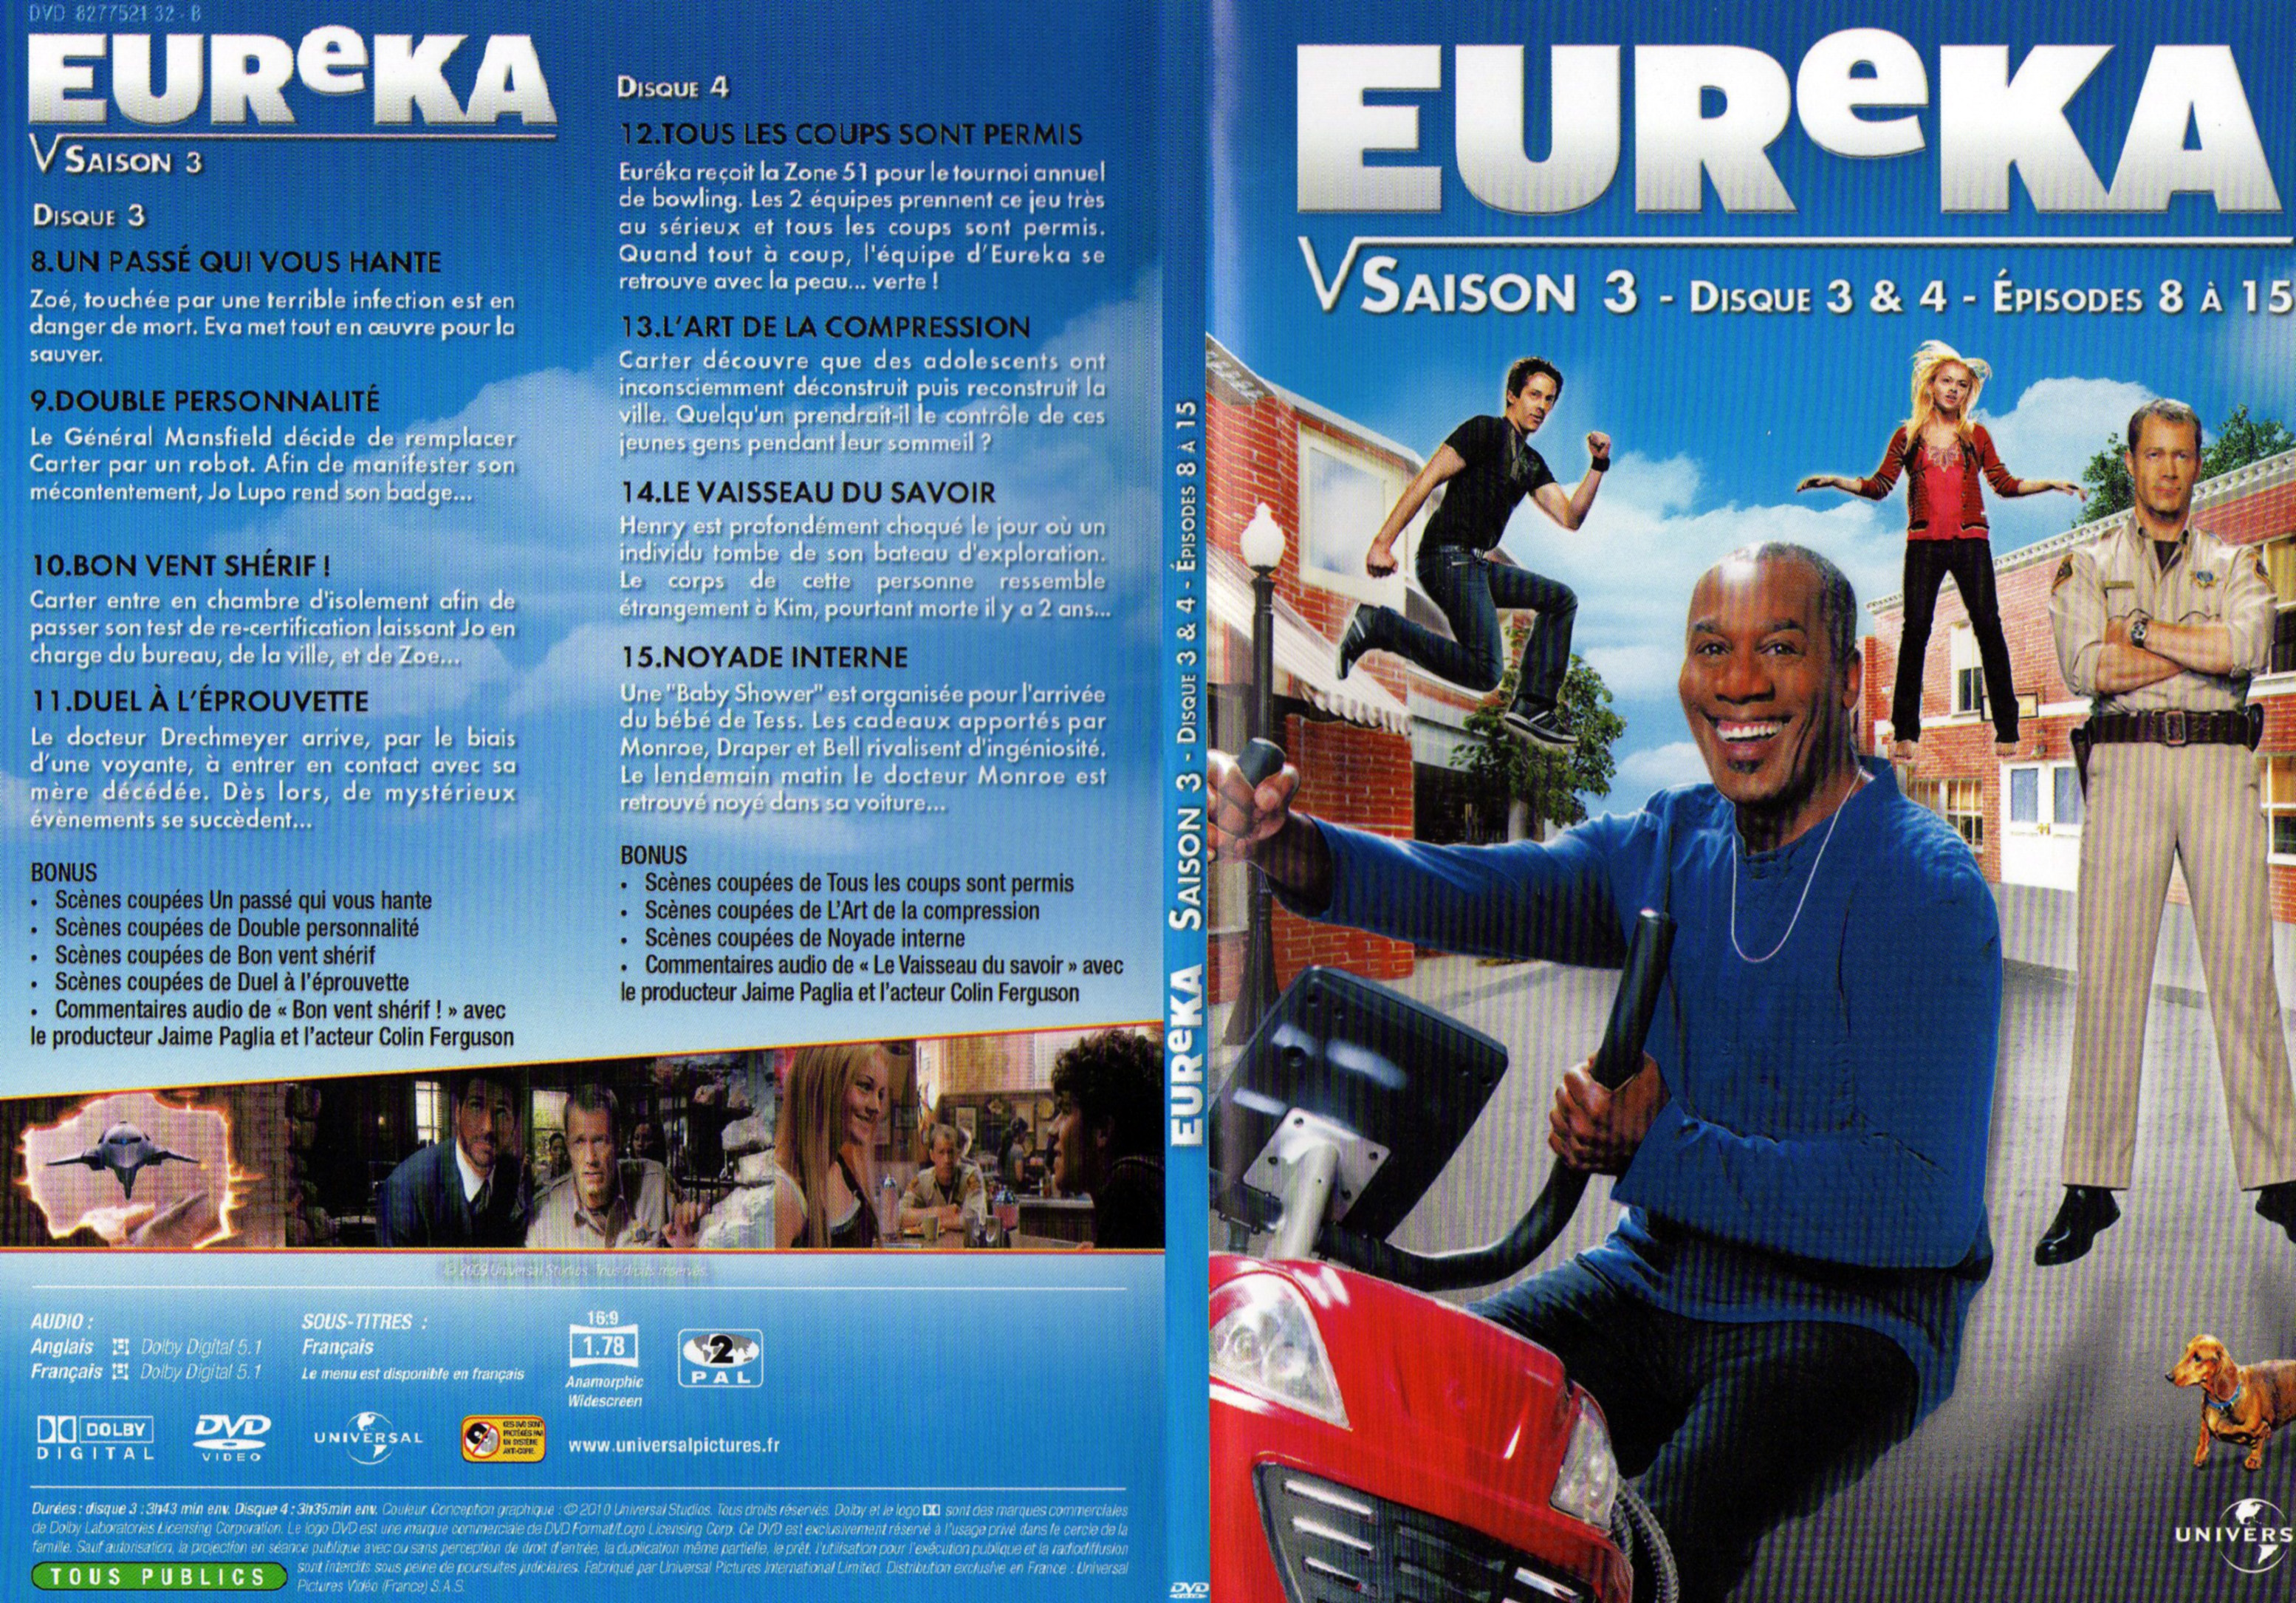 Jaquette DVD Eureka Saison 3 DVD 2